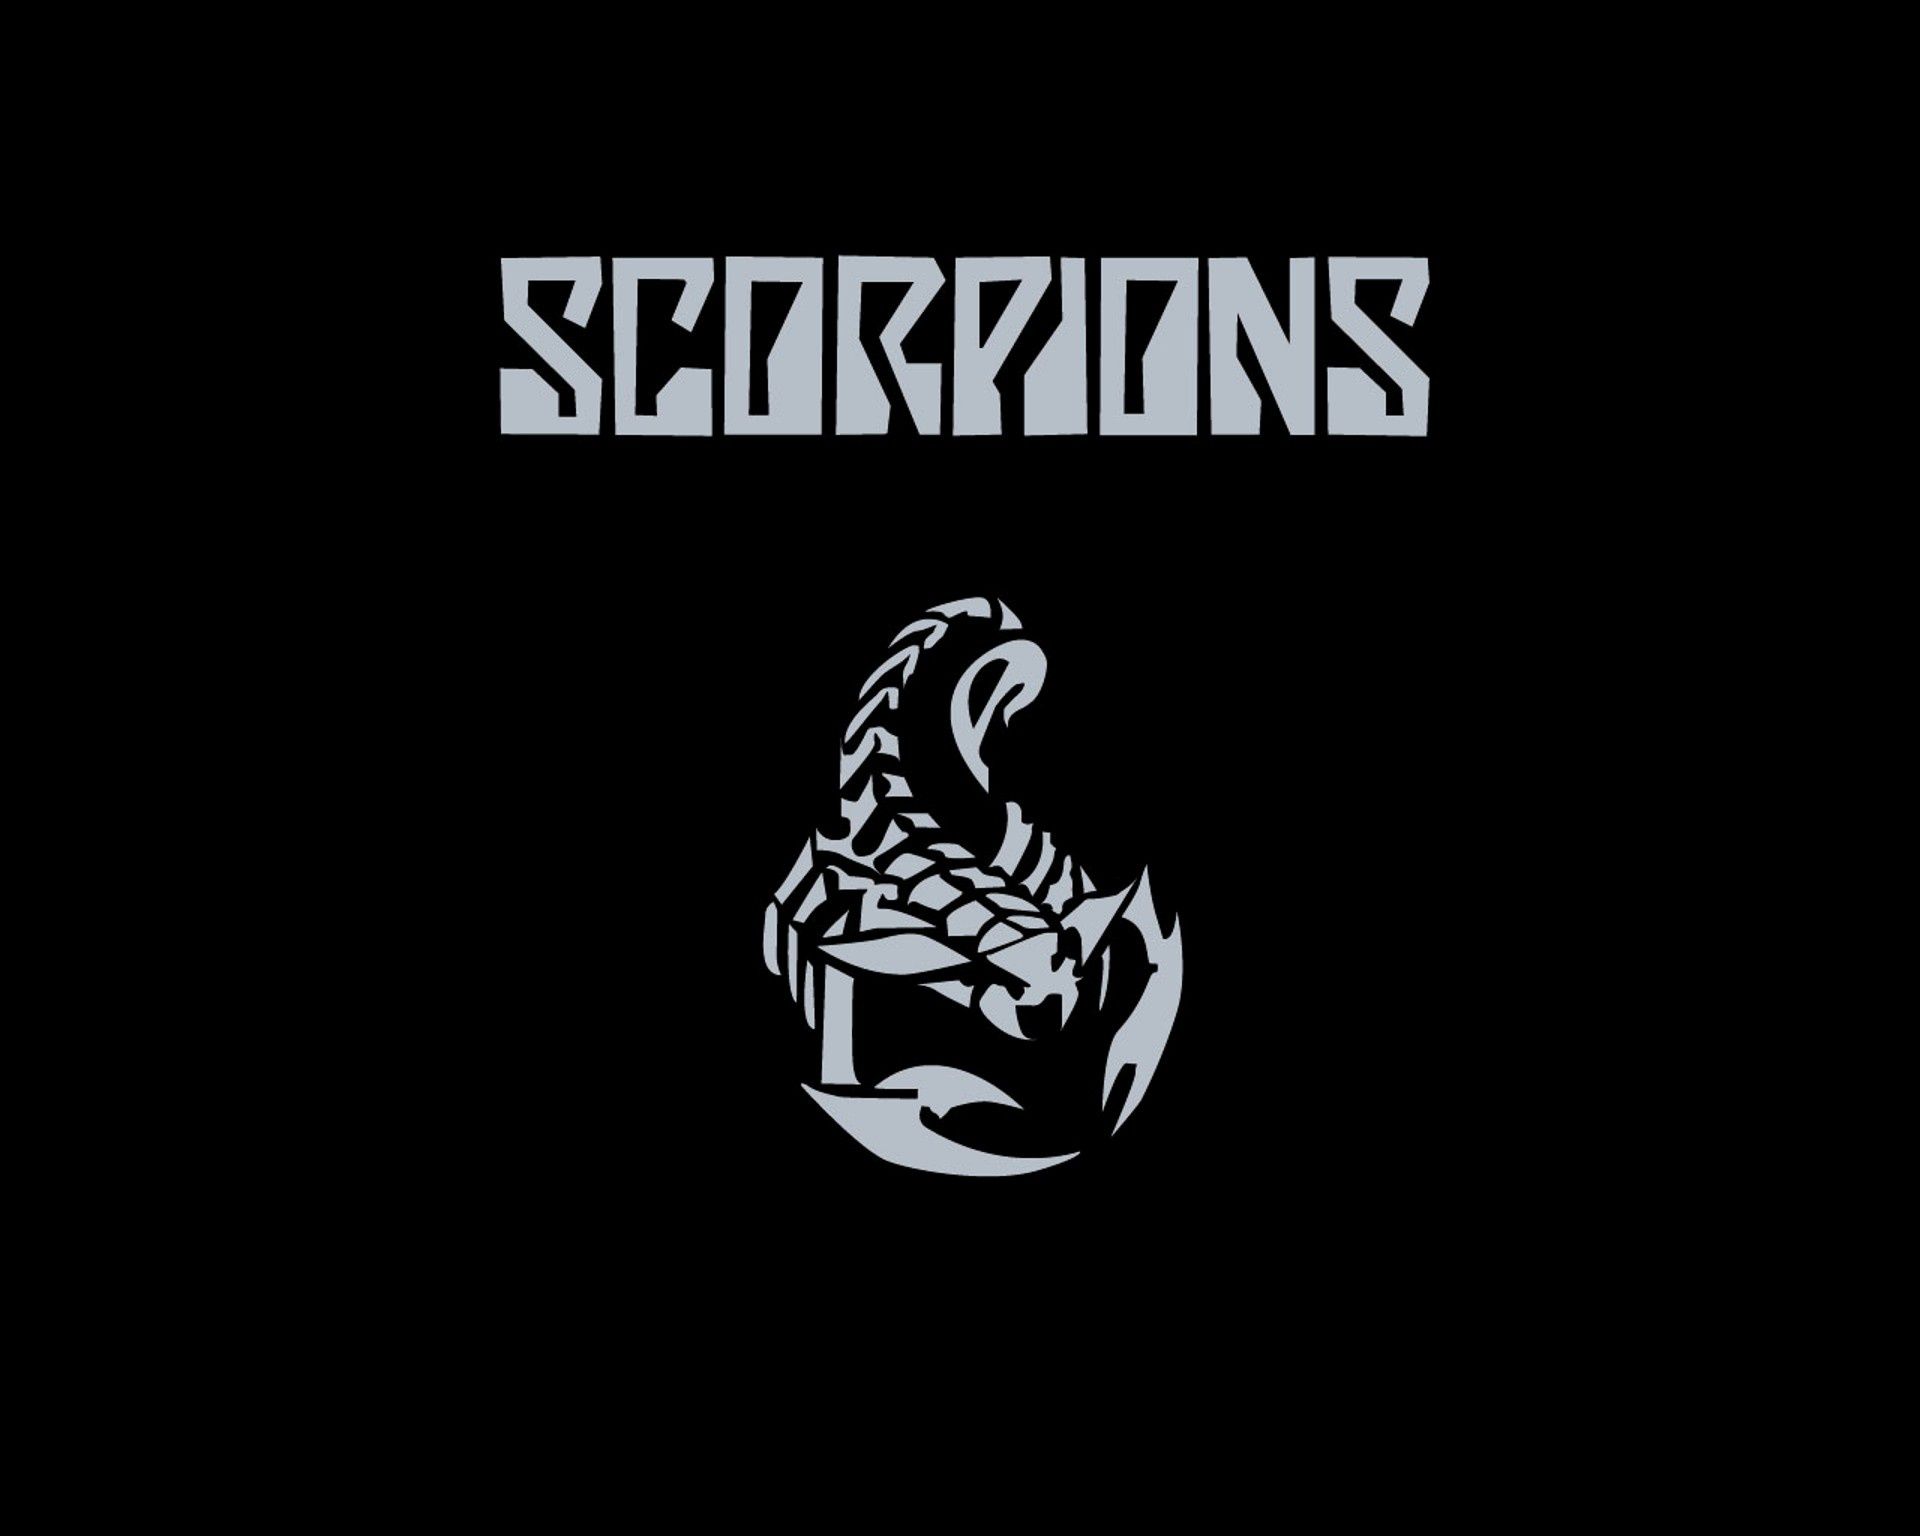 Scorpions Band Wallpaper Free Scorpions Band Background